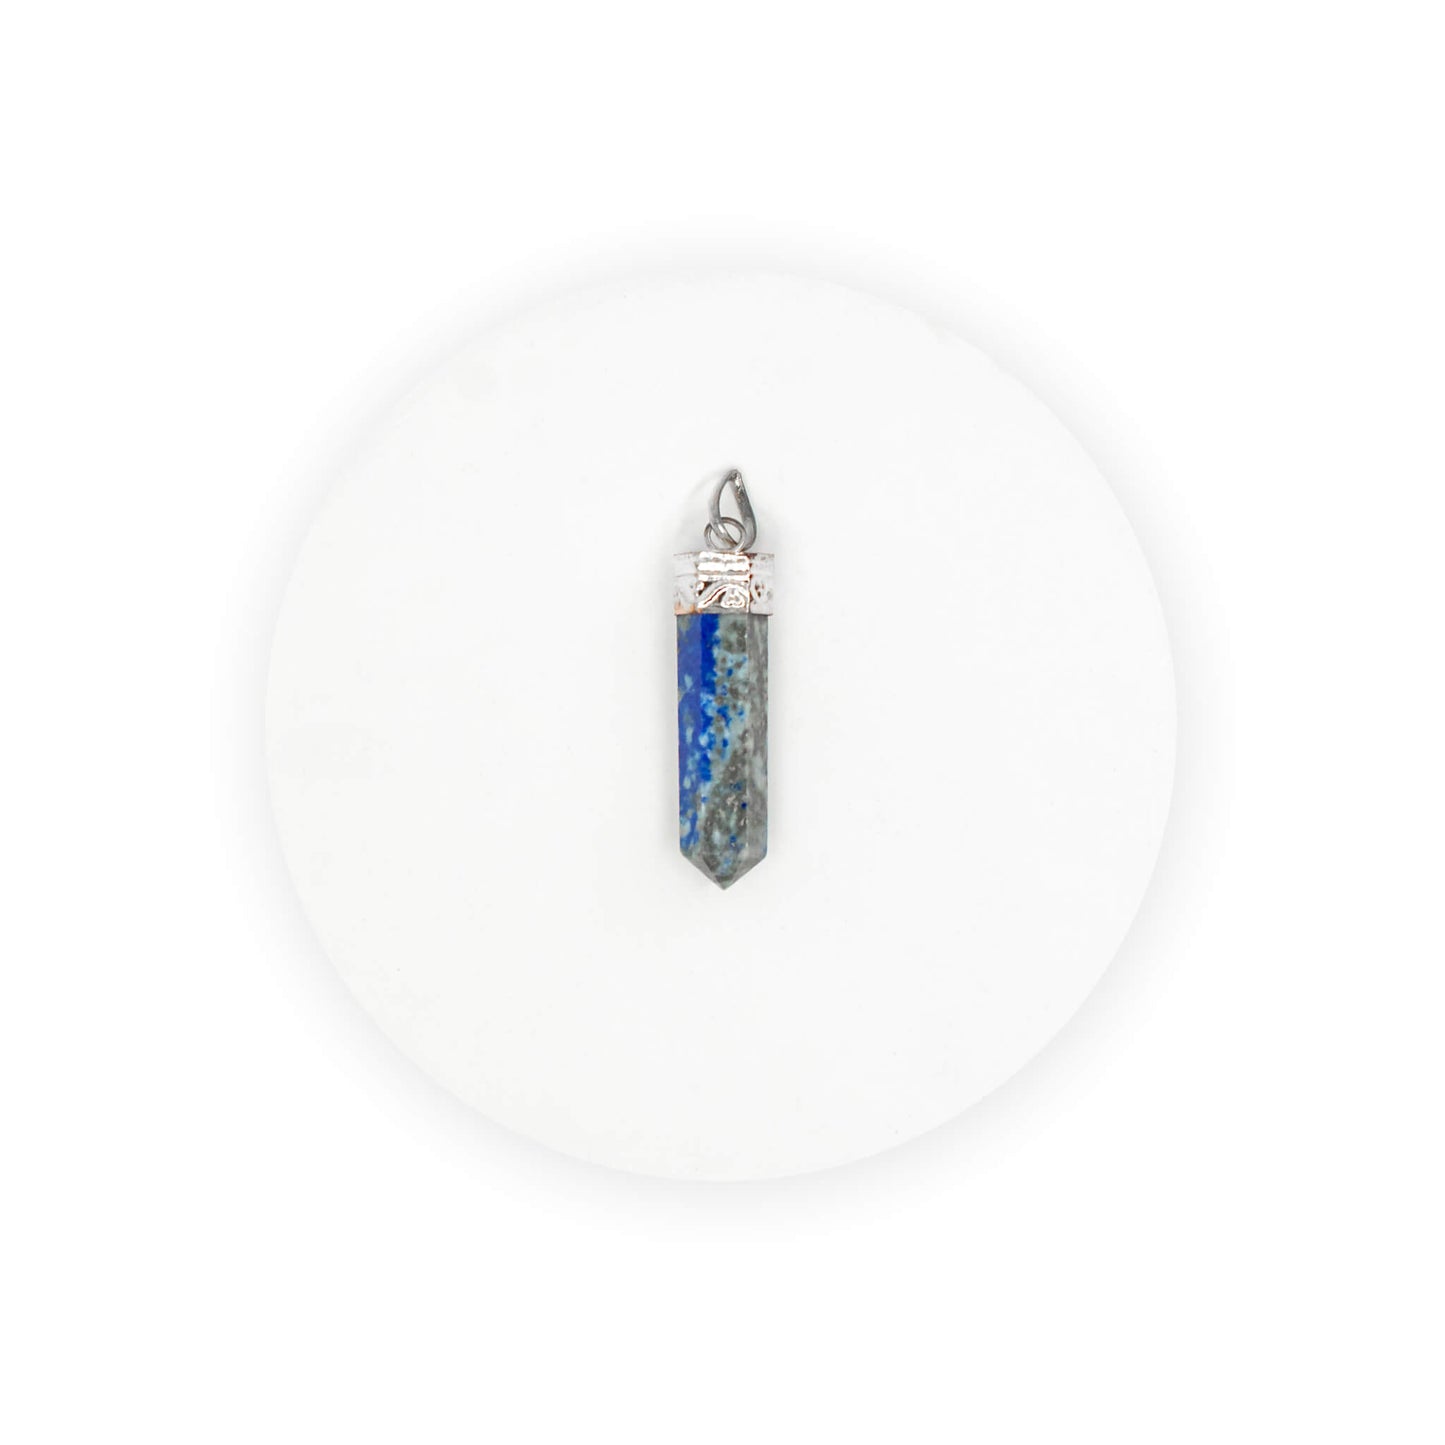  lapis lazuli stone pendant